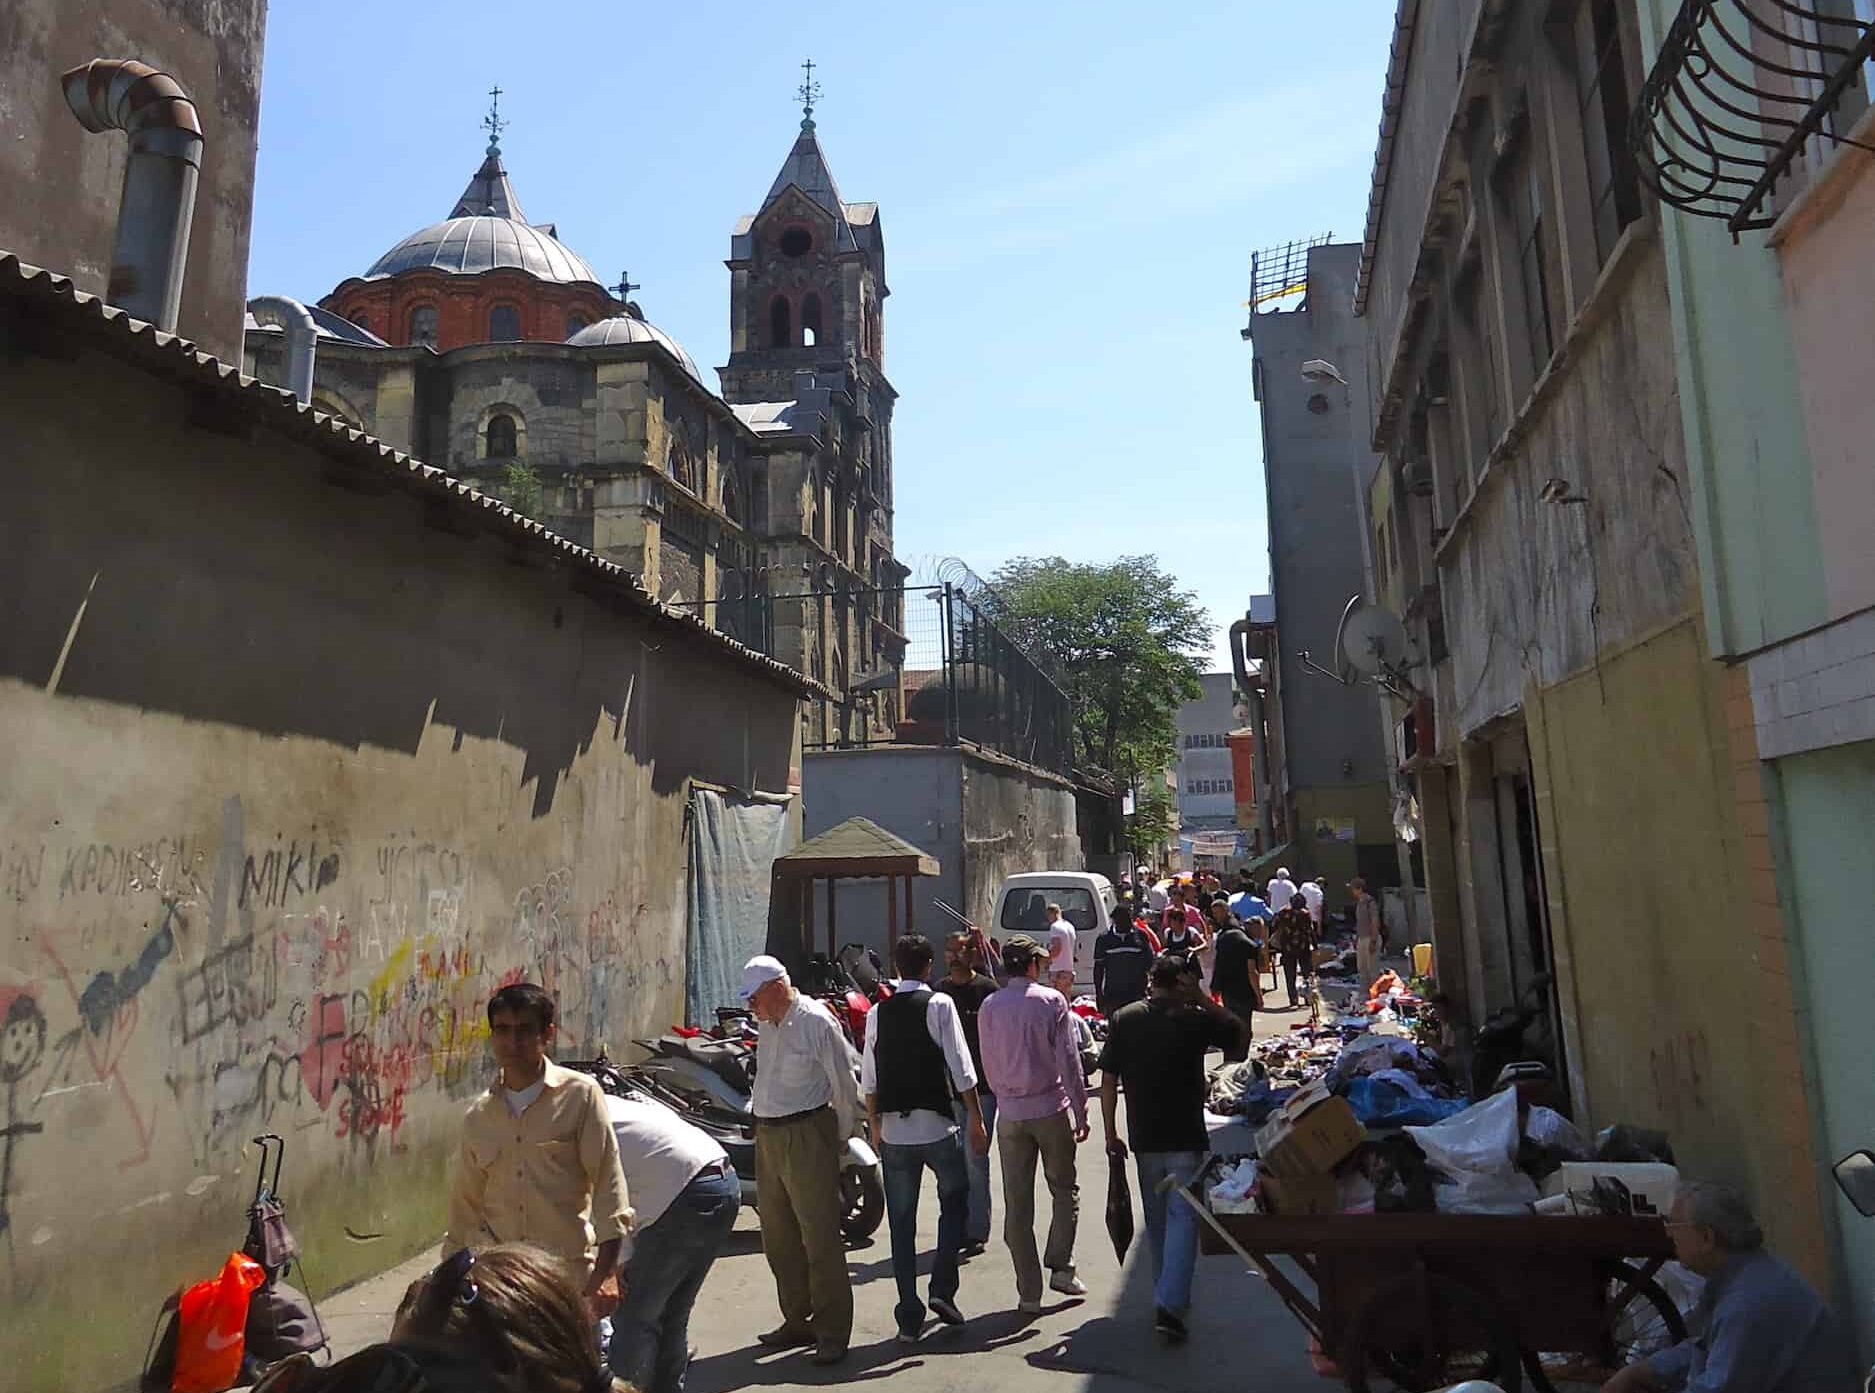 Flea market in Dolapdere, Istanbul, Turkey